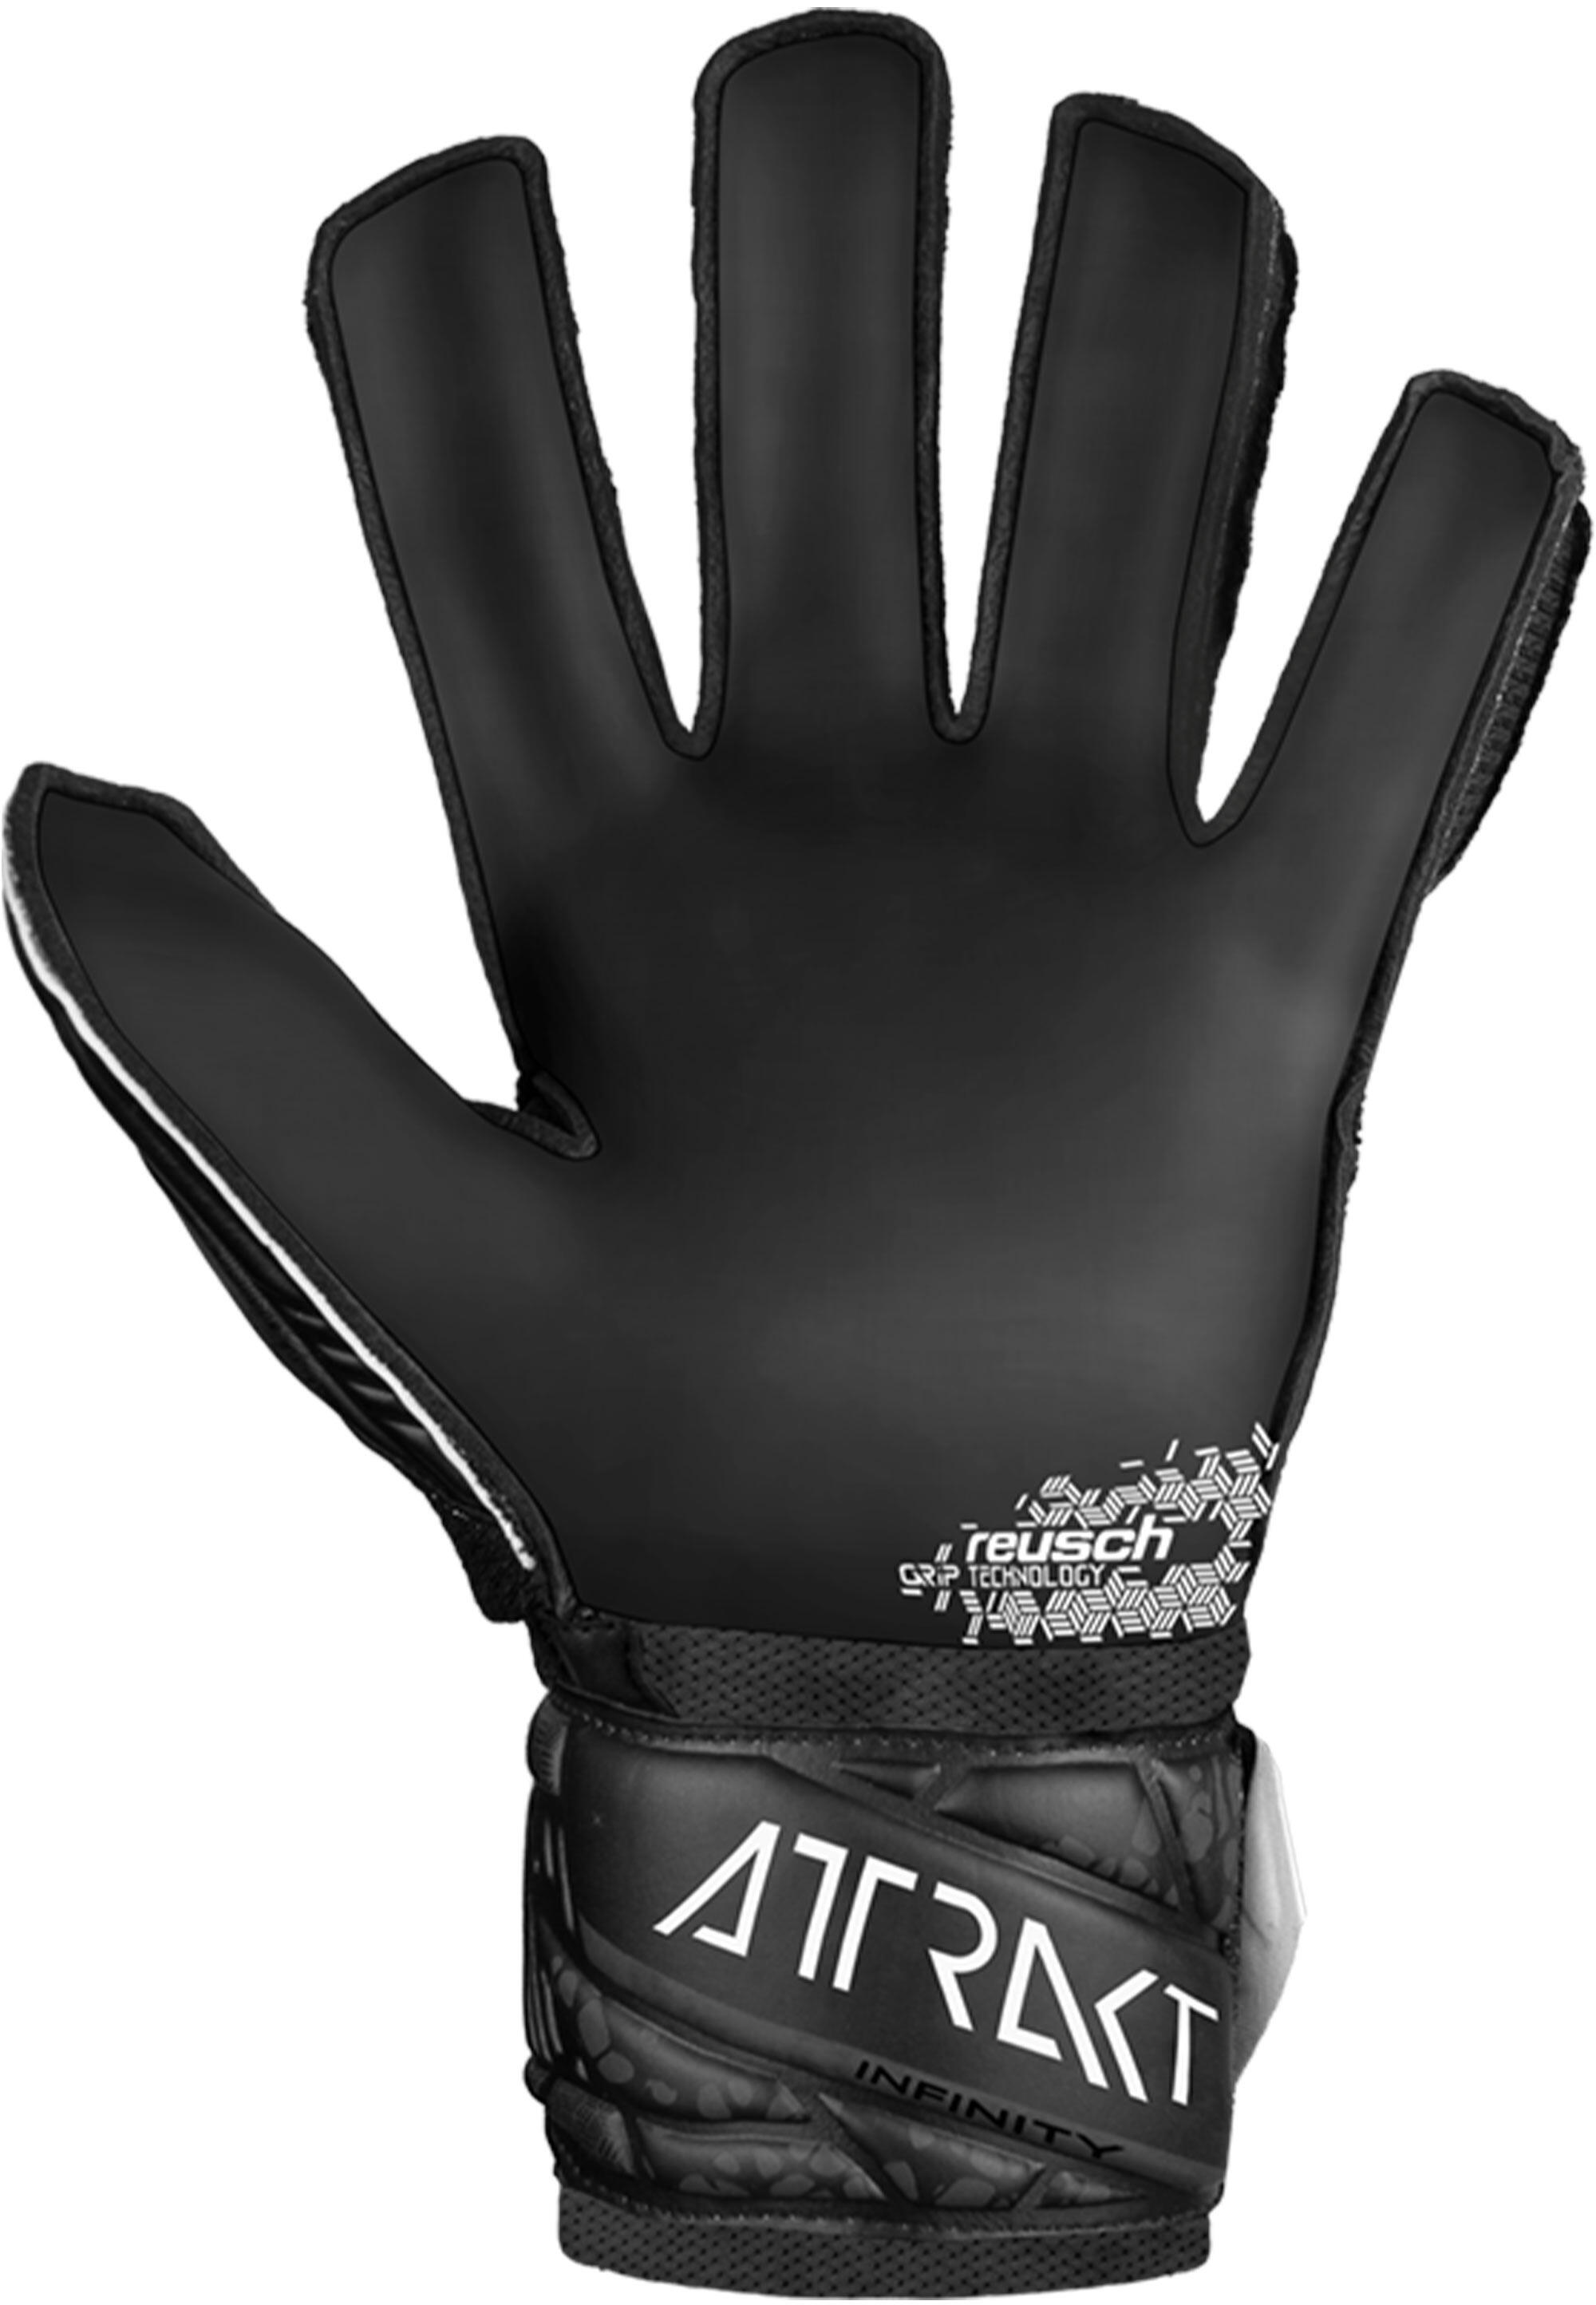 Reusch Attrakt Infinity Junior Goalkeeper Gloves 4/7